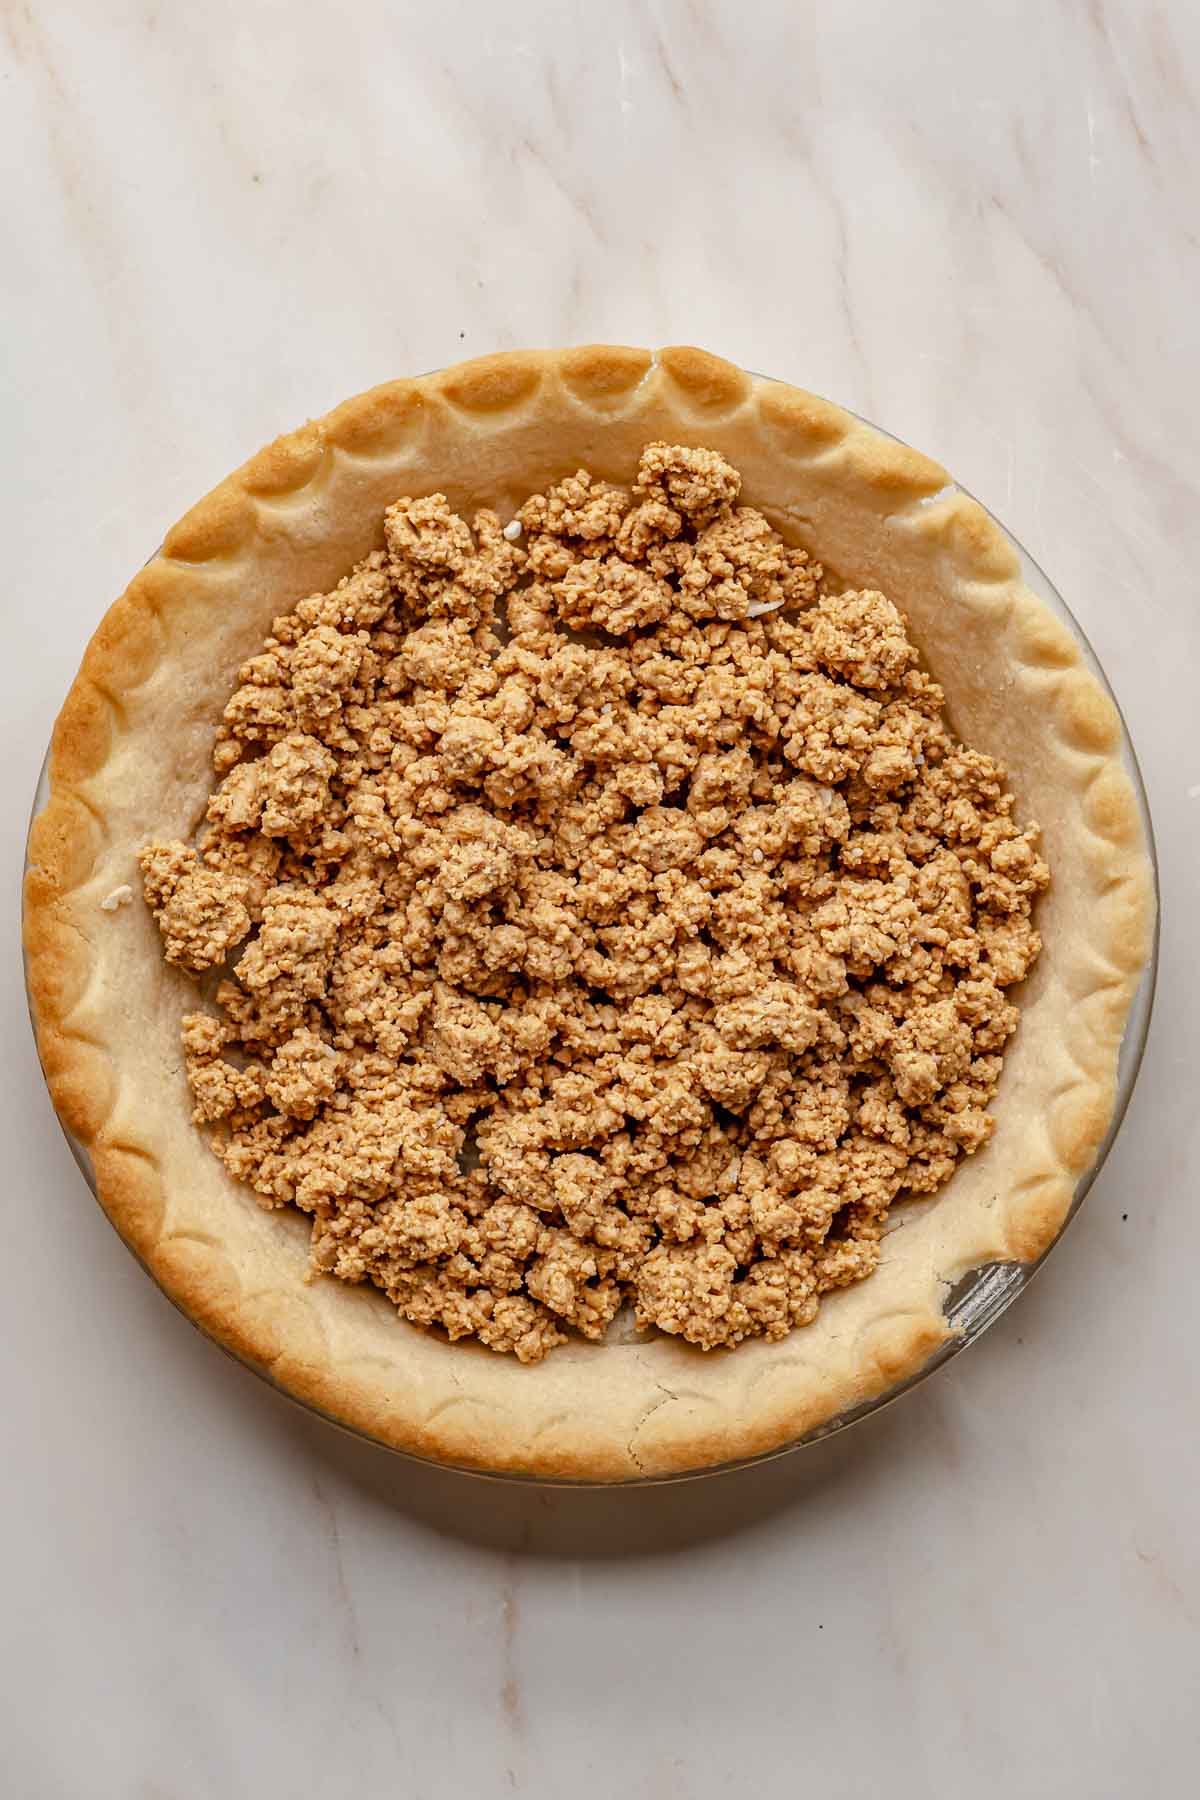 Peanut butter crumbles in a pie curst.